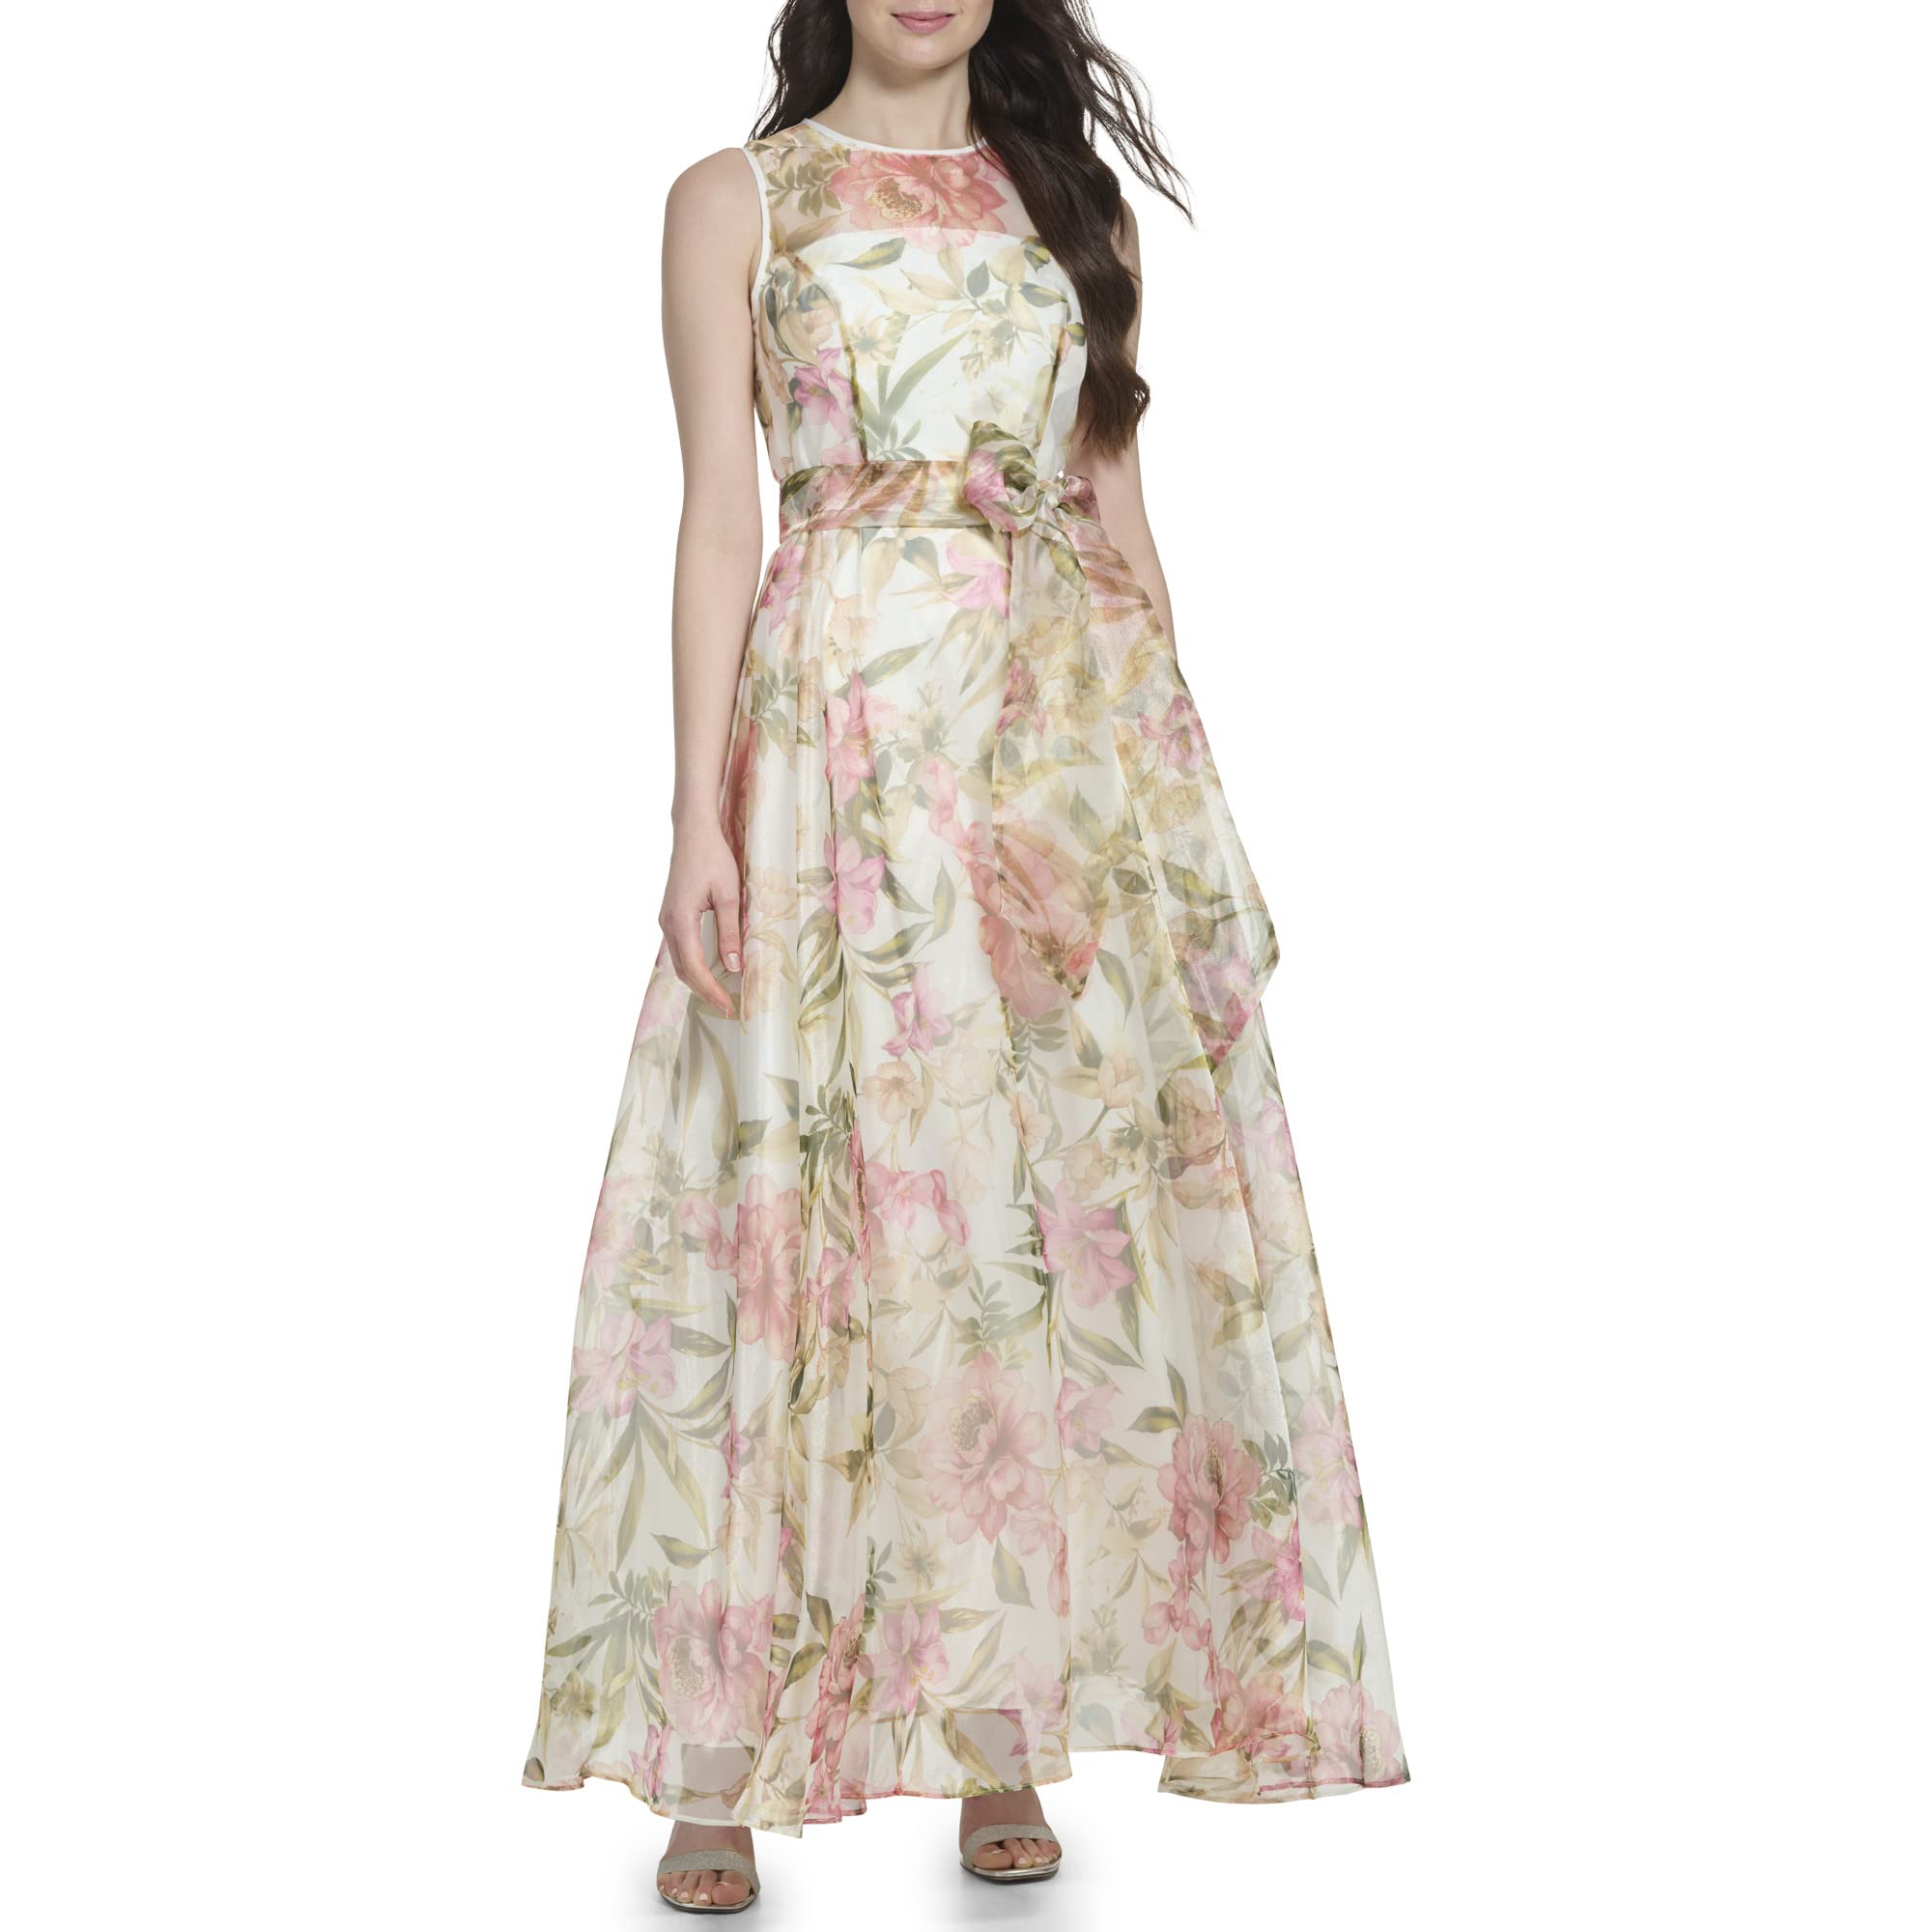 Eliza J Women's Gown Style Floral Organza Sleeveless Jewel Neck Dress